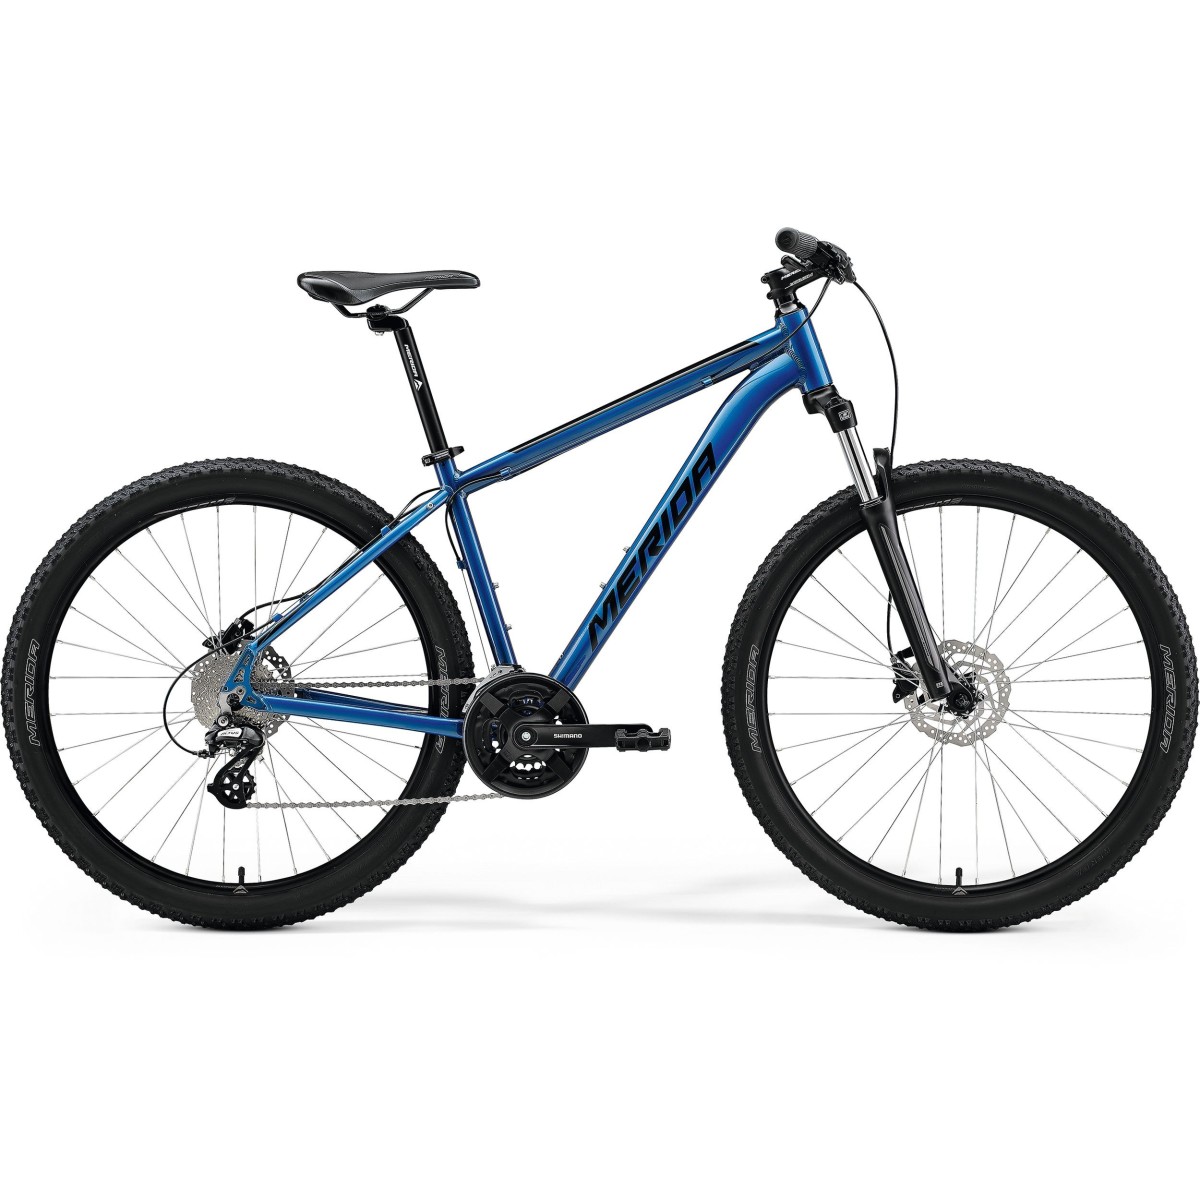 MERIDA BIG SEVEN 15 bicycle - blue